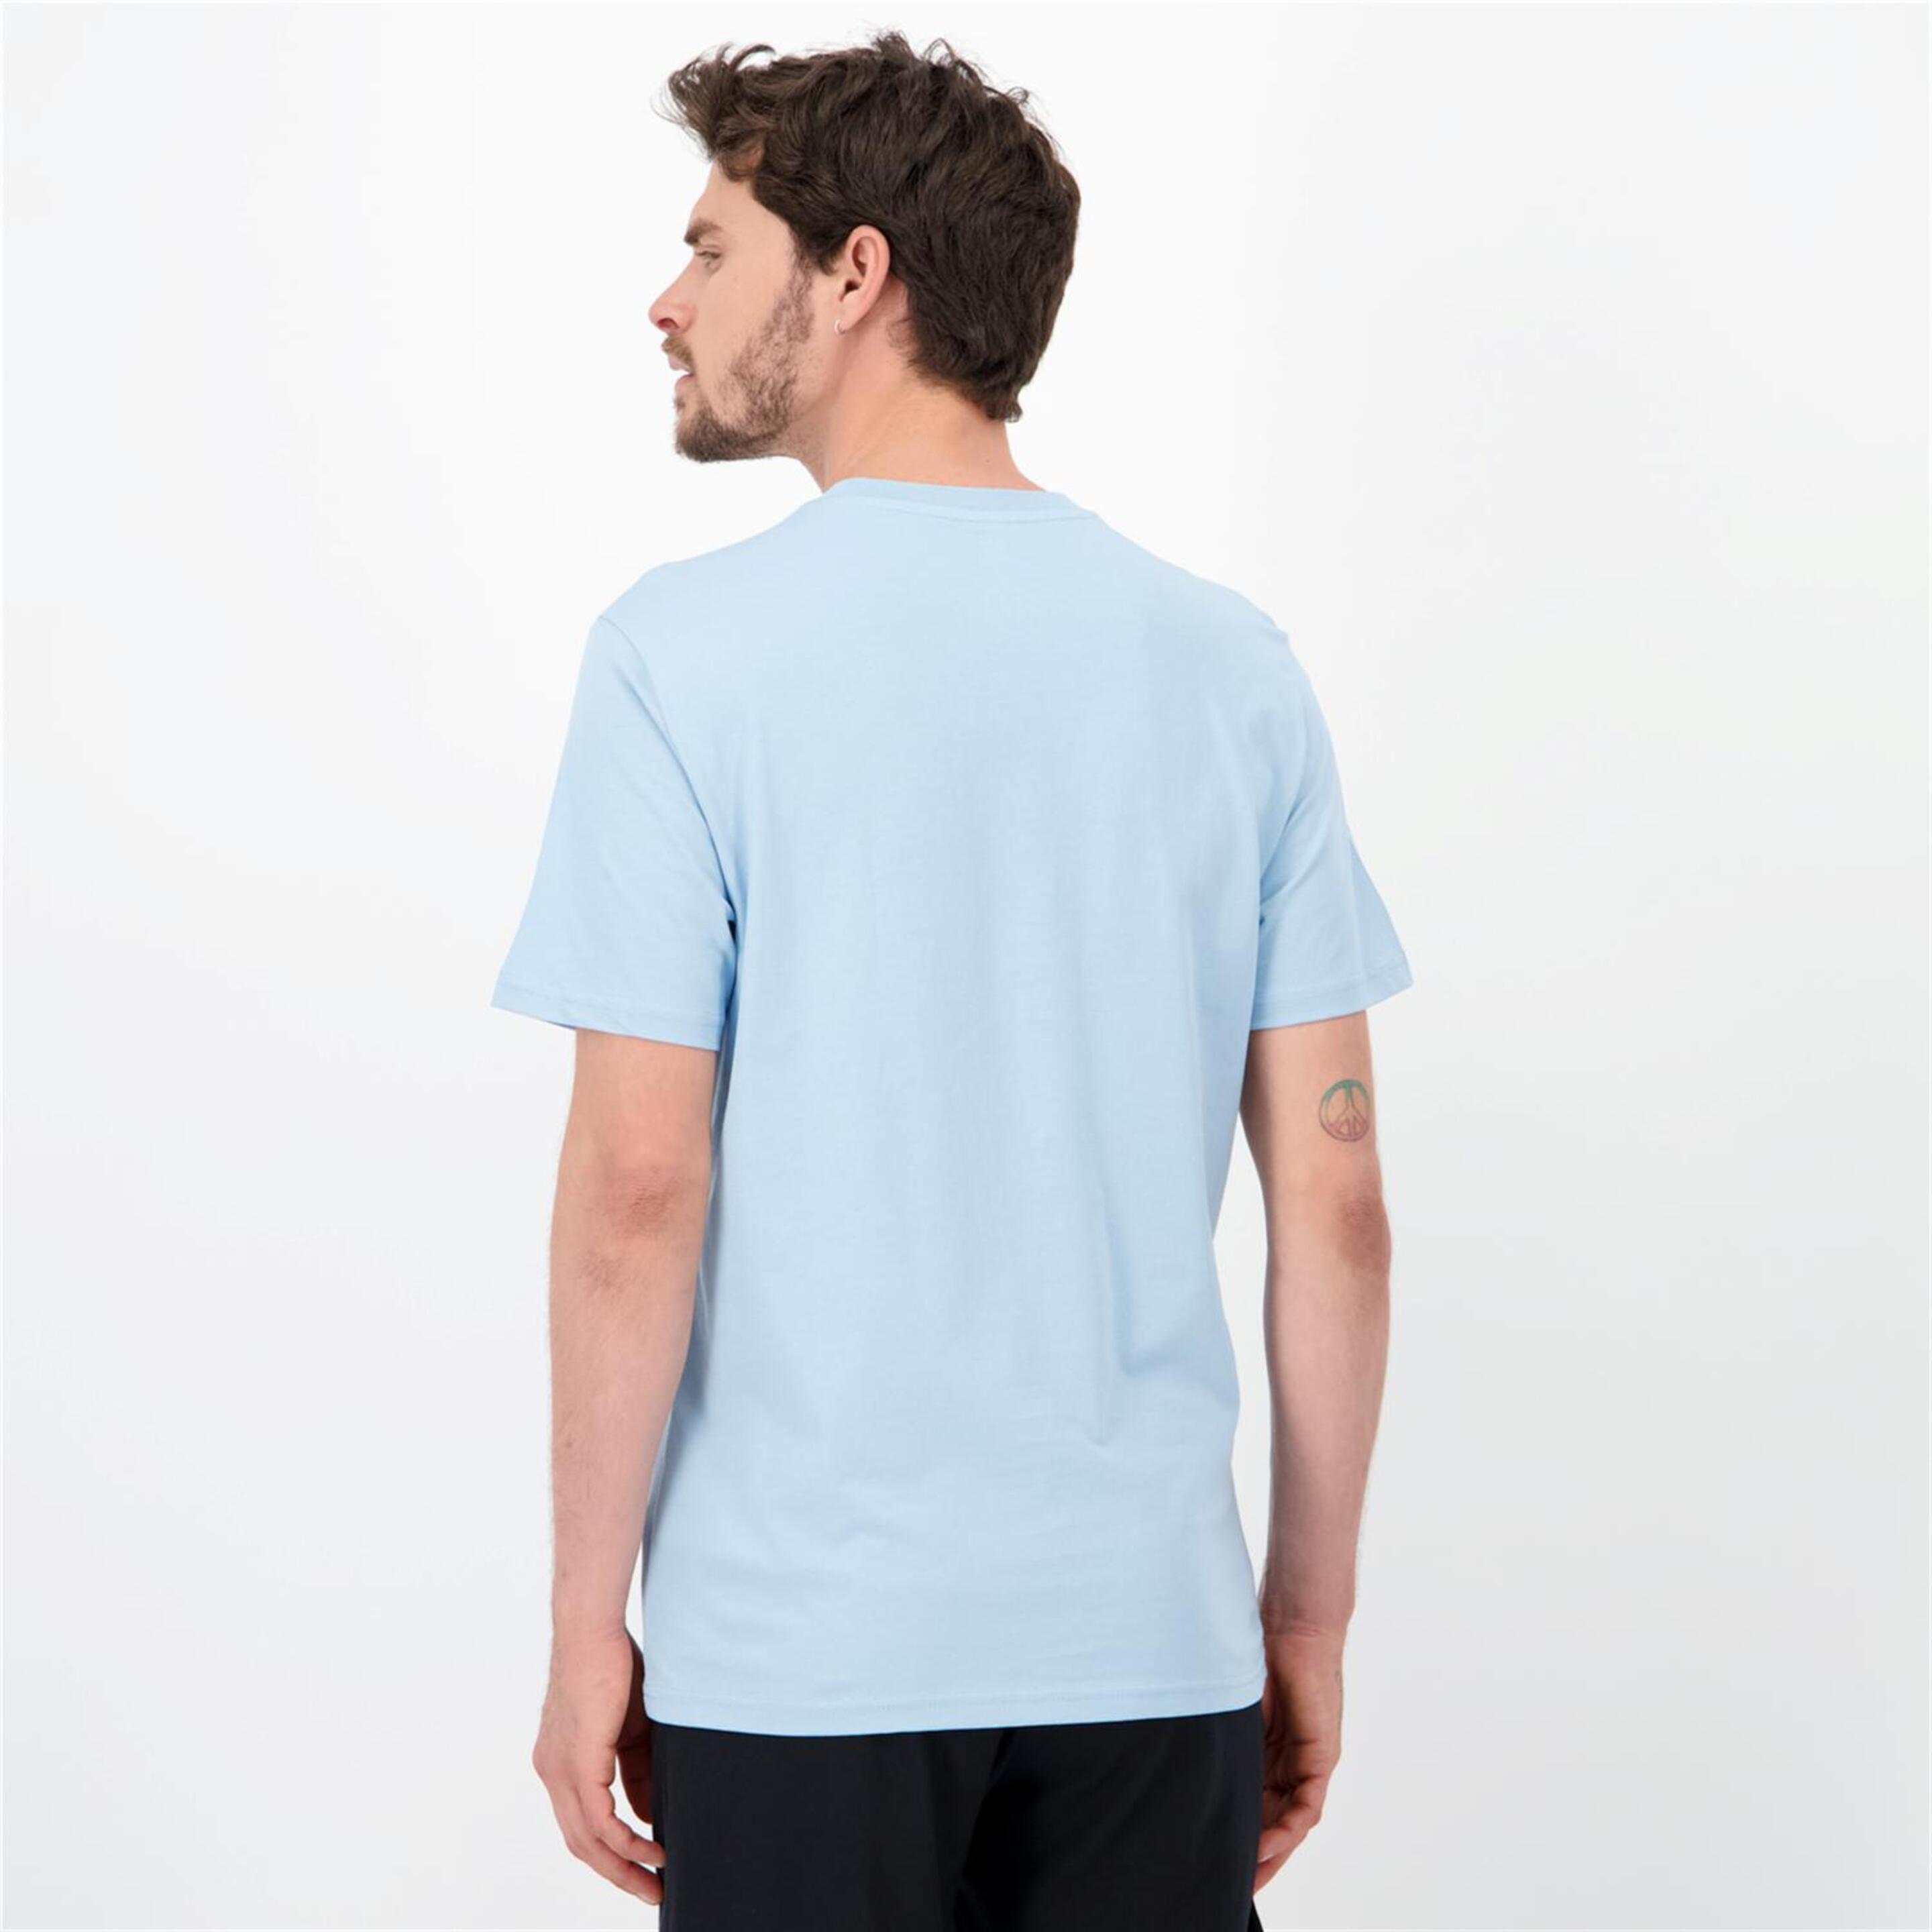 New Balance Athletic - Azul - Camiseta Hombre